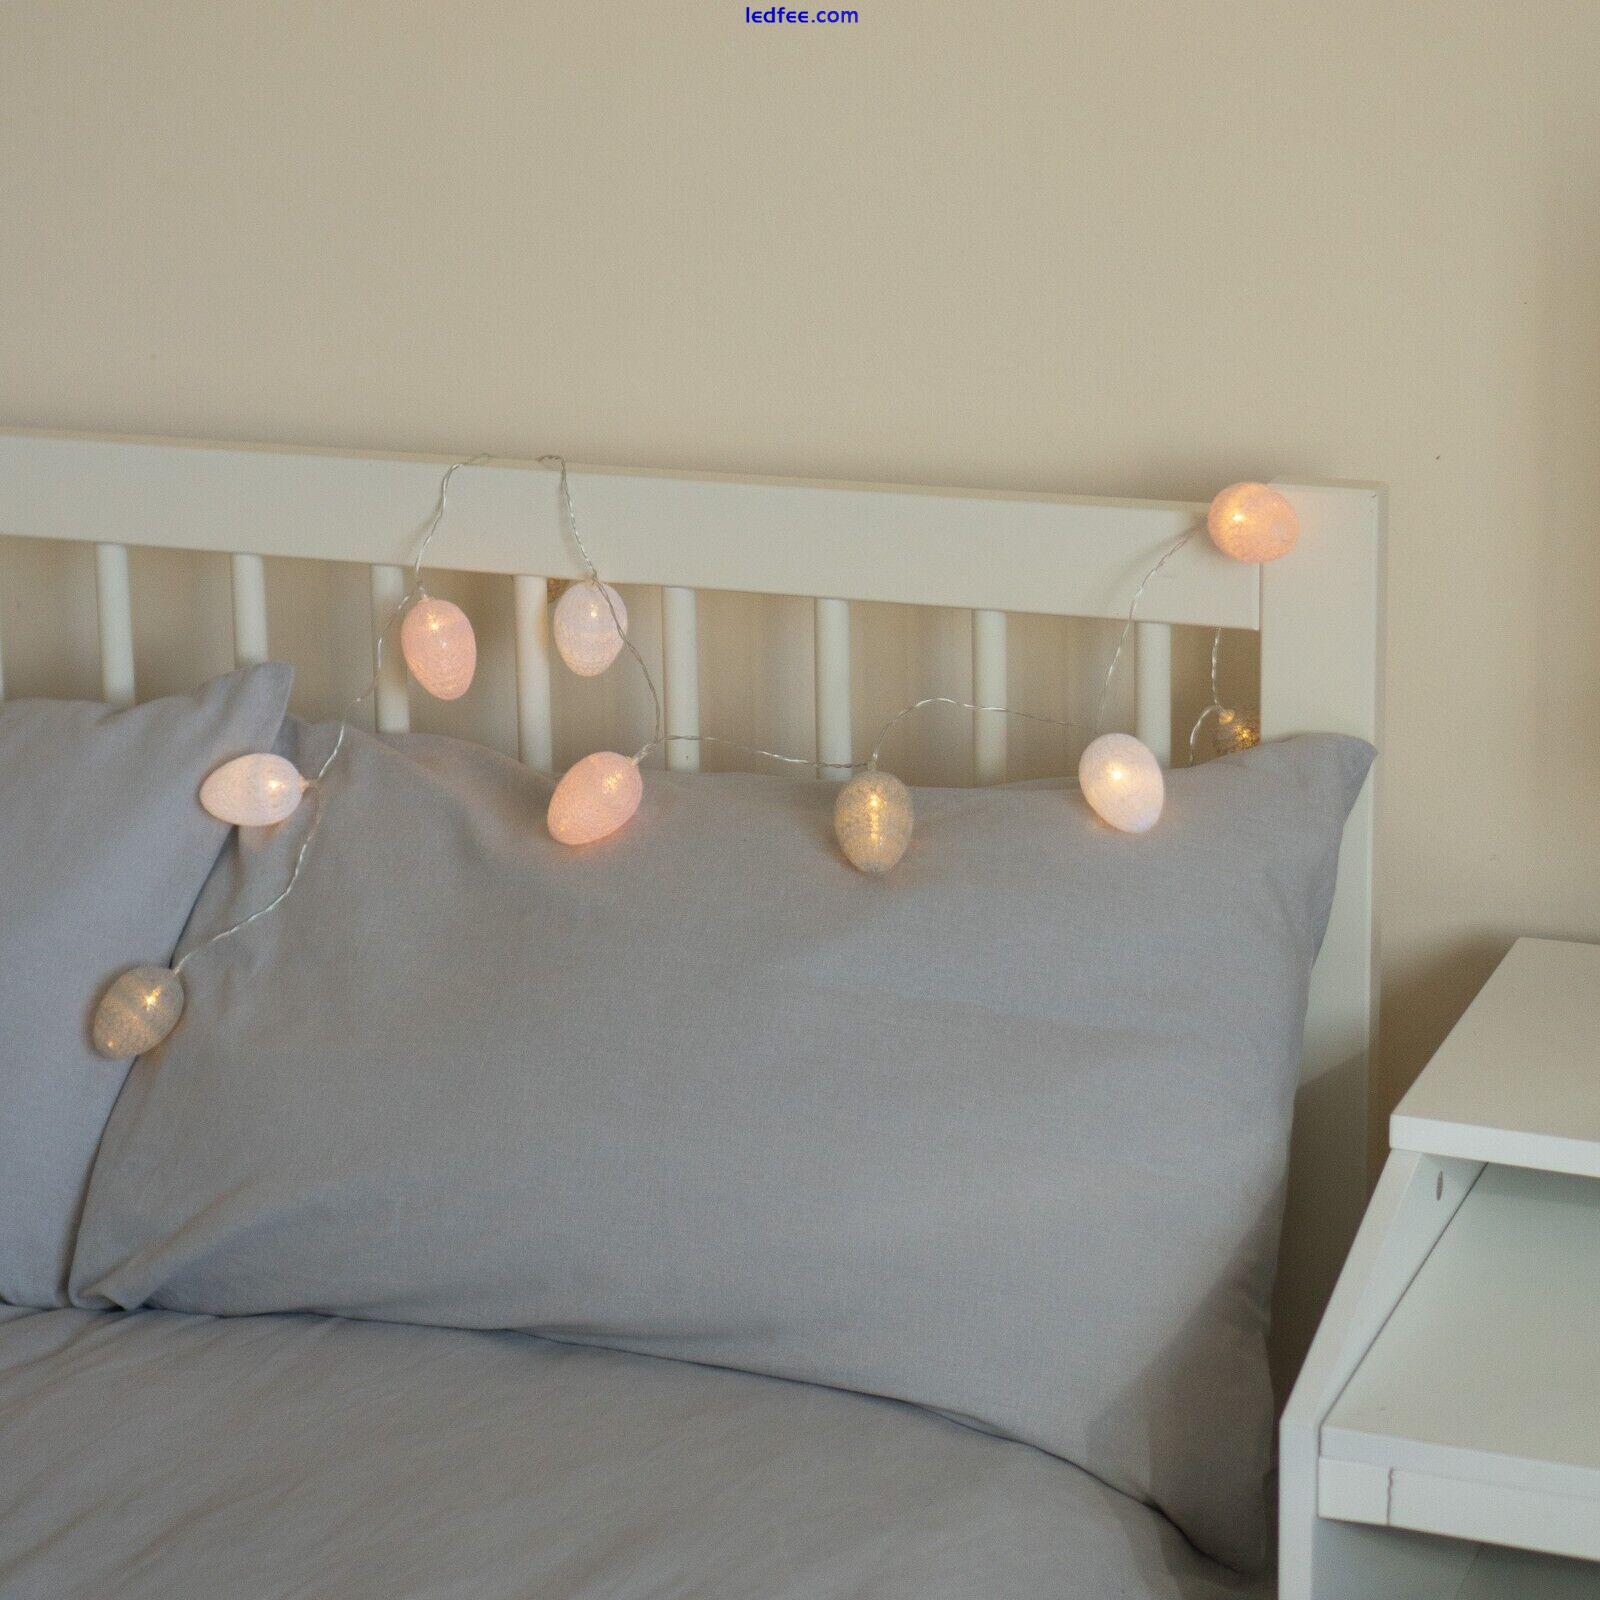 10 LED Easter Egg Fairy String Light – Warm White Indoor Home Decoration Battery 0 